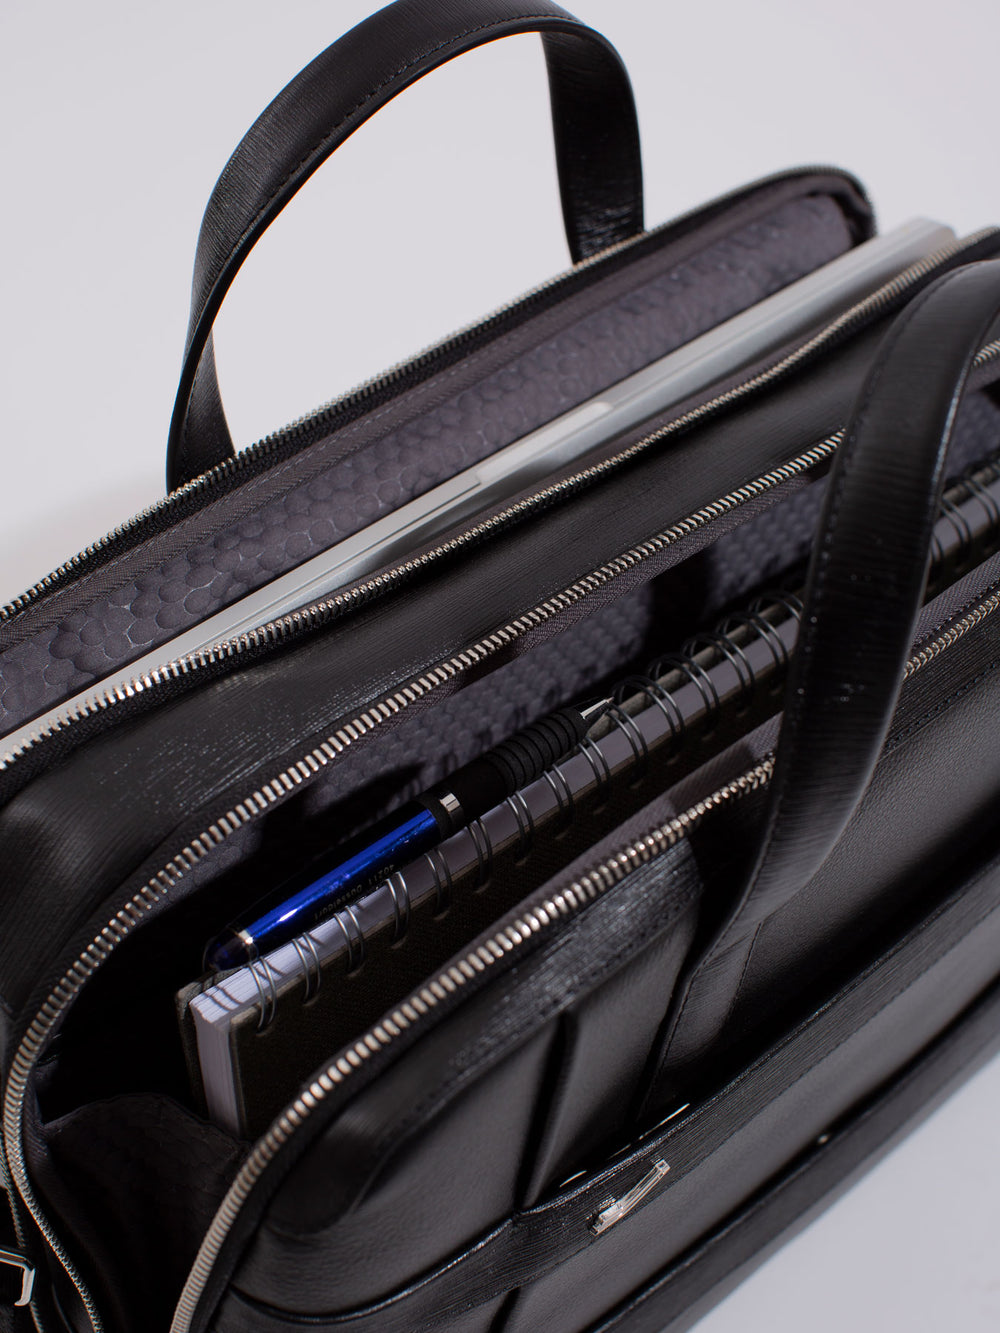 vocier briefcase medium details open zipper black